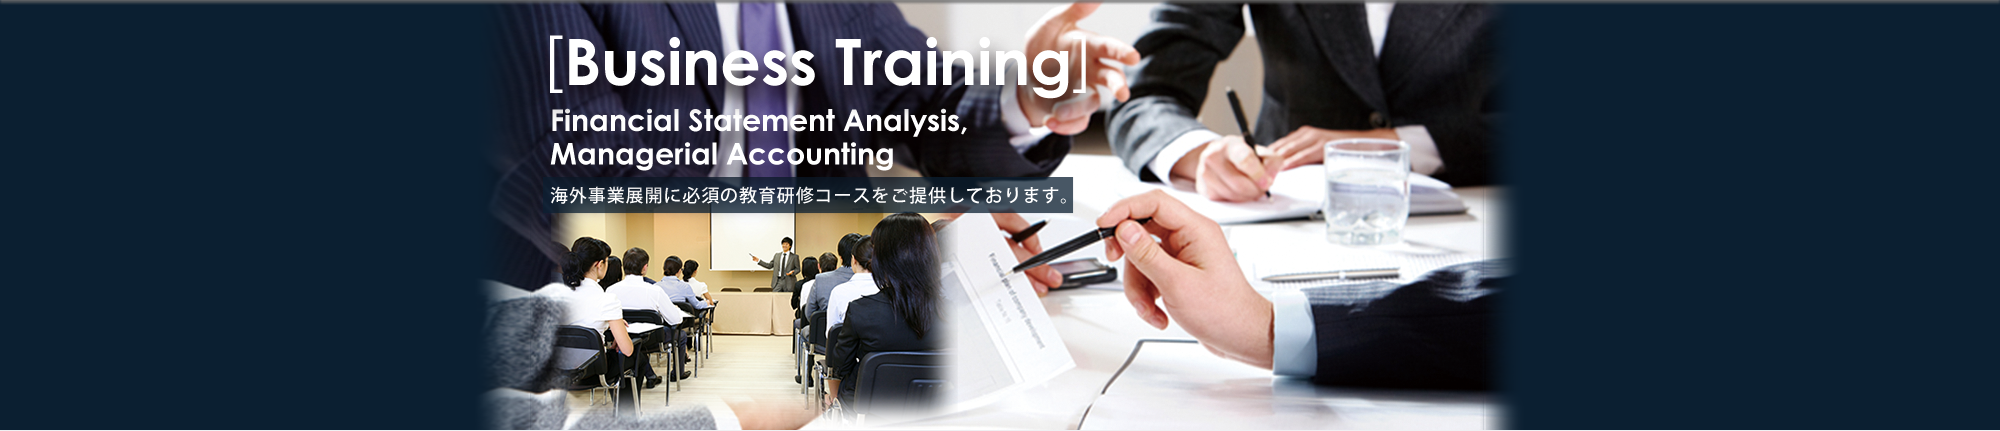 [Business Training] Financial Statement Analysis, Manegerial Accounting 海外事業展開に必須の教育研修コースをご提供しております。